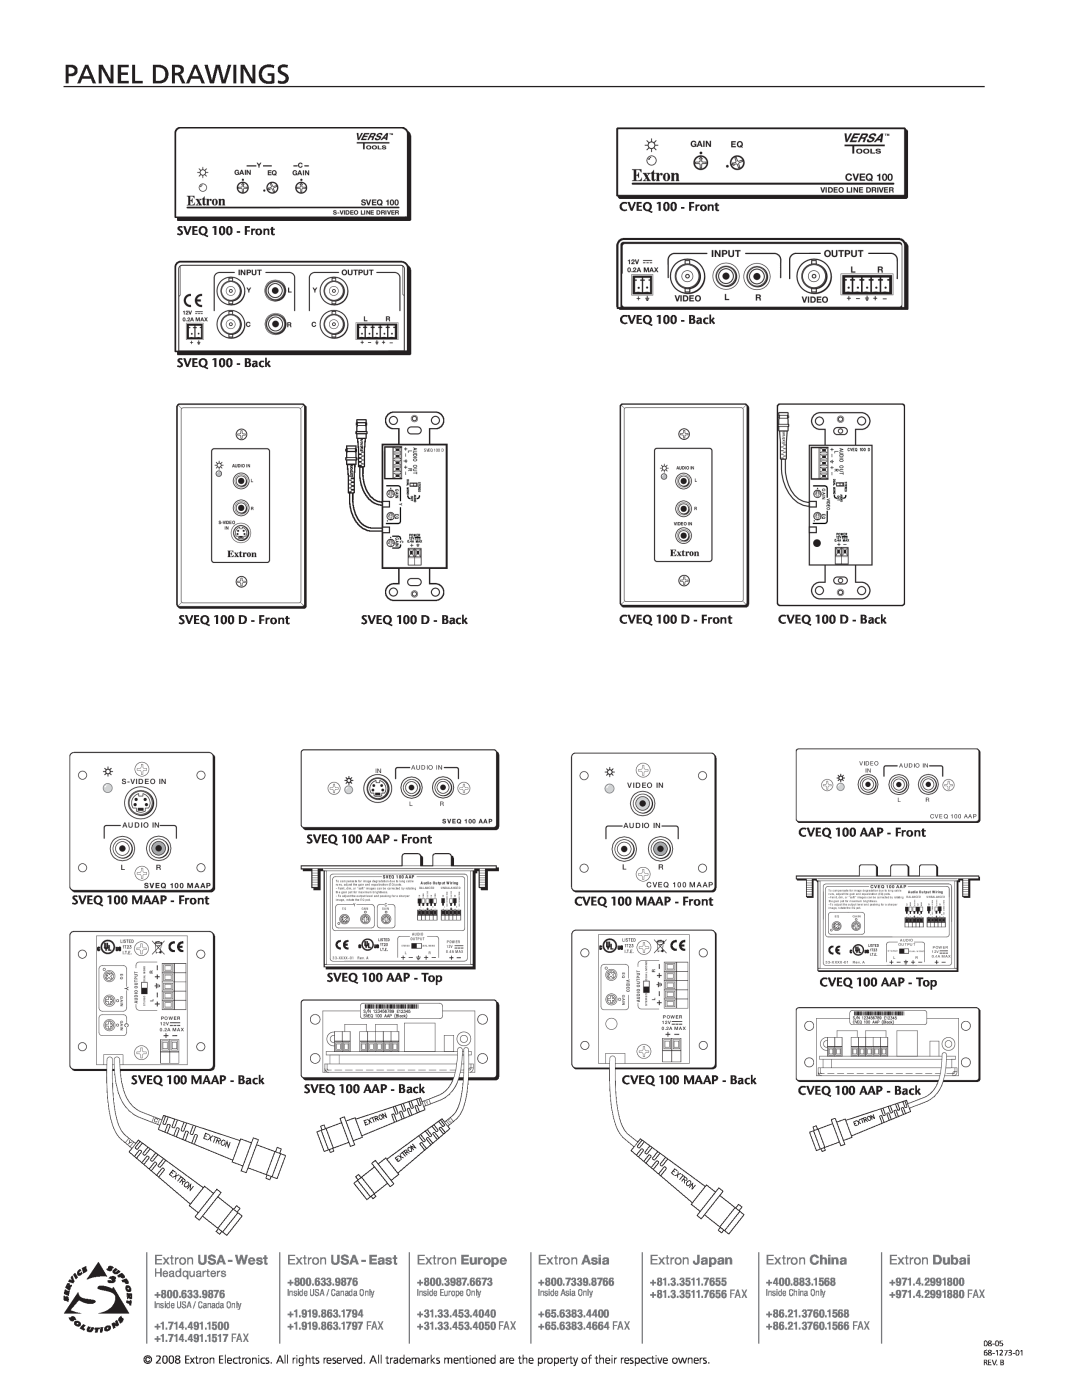 Extron electronic CVEQ 100 MAAP manual Panel drawings, Extron USA - West, Extron USA - East, Extron Europe, Extron Asia 